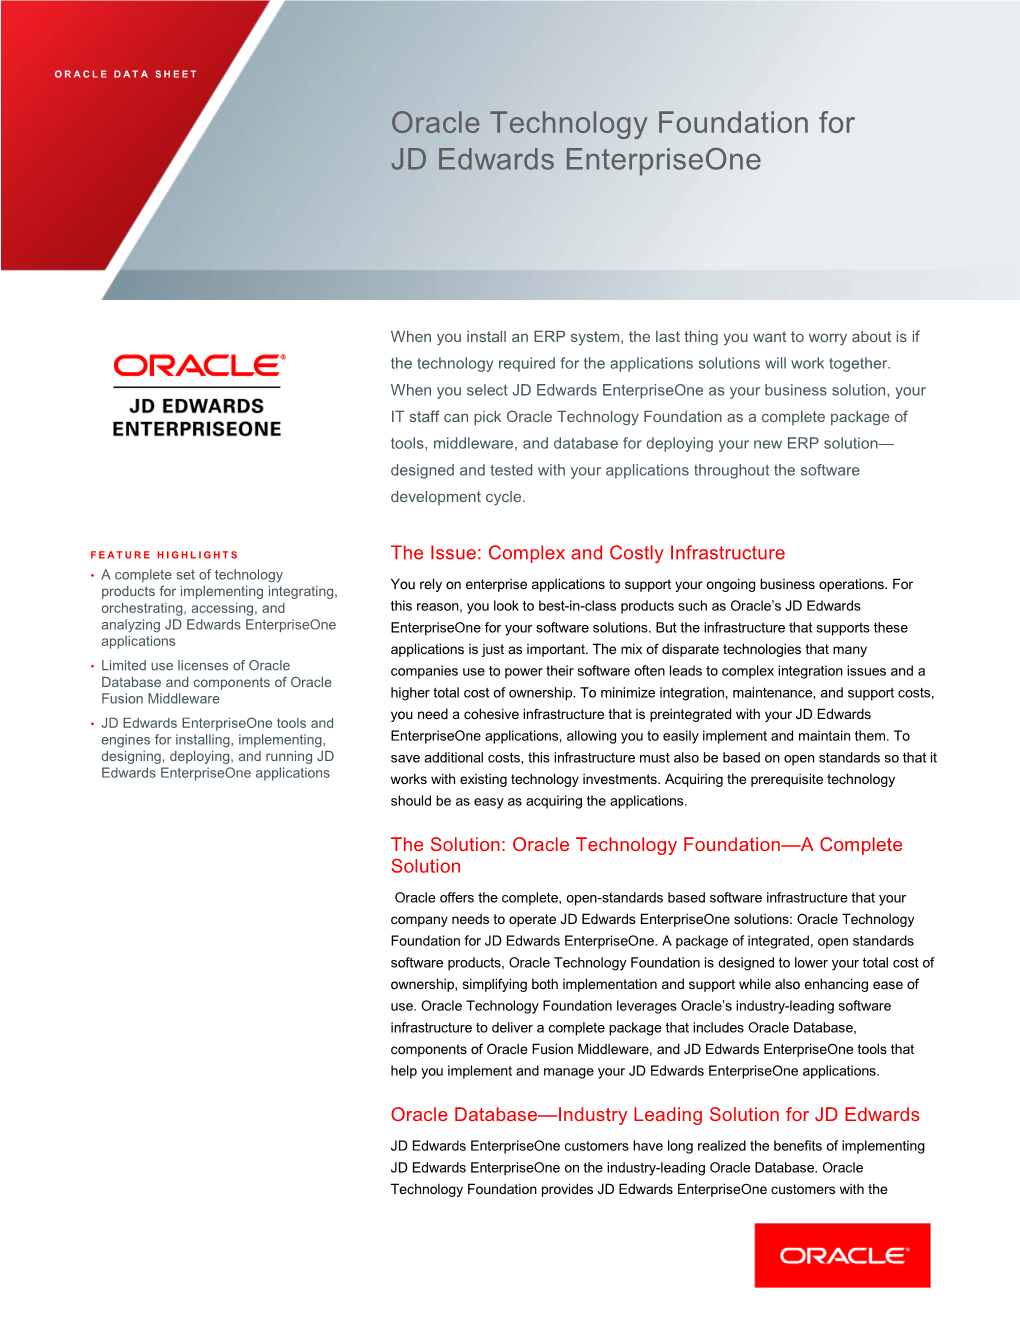 Oracle Technology Foundation for JD Edwards Enterpriseone Data Sheet